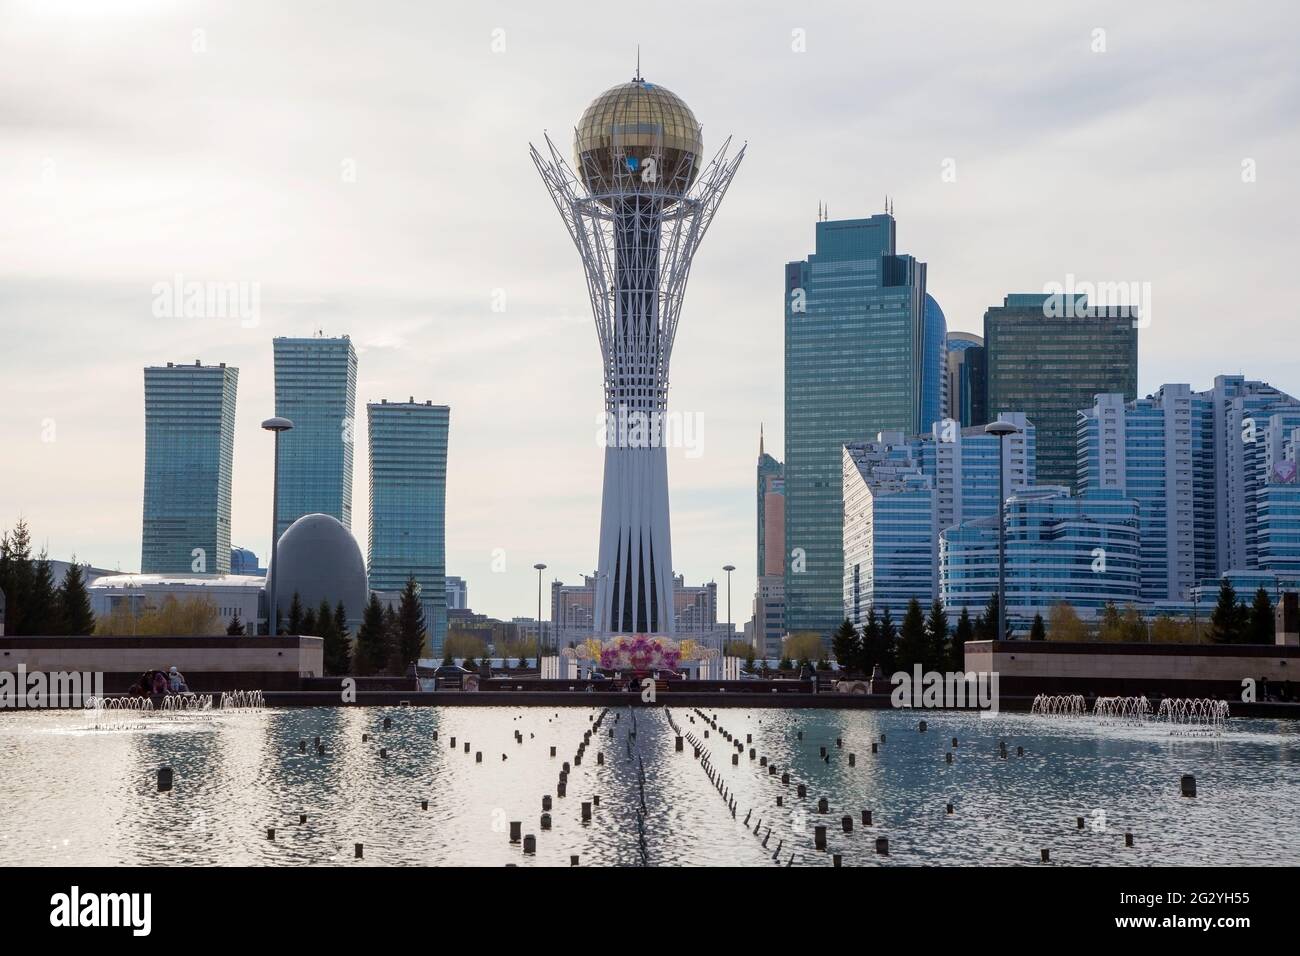 Bayterek Tower In Astana Nur Sultan The Capital Of Kazakhstan Astana Kazakhstan 4 28 17 Stock Photo Alamy